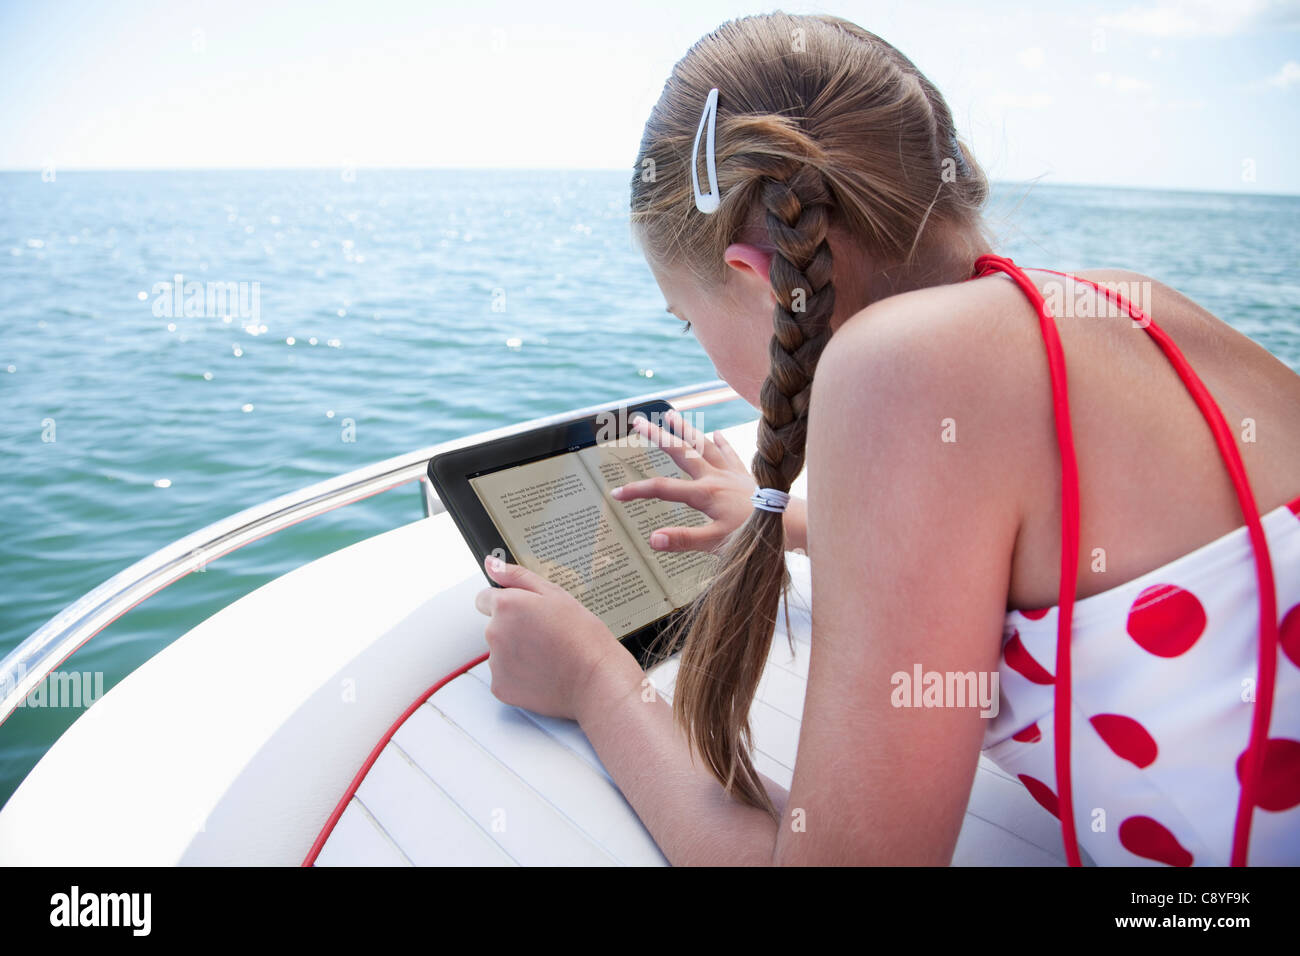 USA, Florida, St. Petersburg, Girl (10-11) using digital tablet on yacht Stock Photo